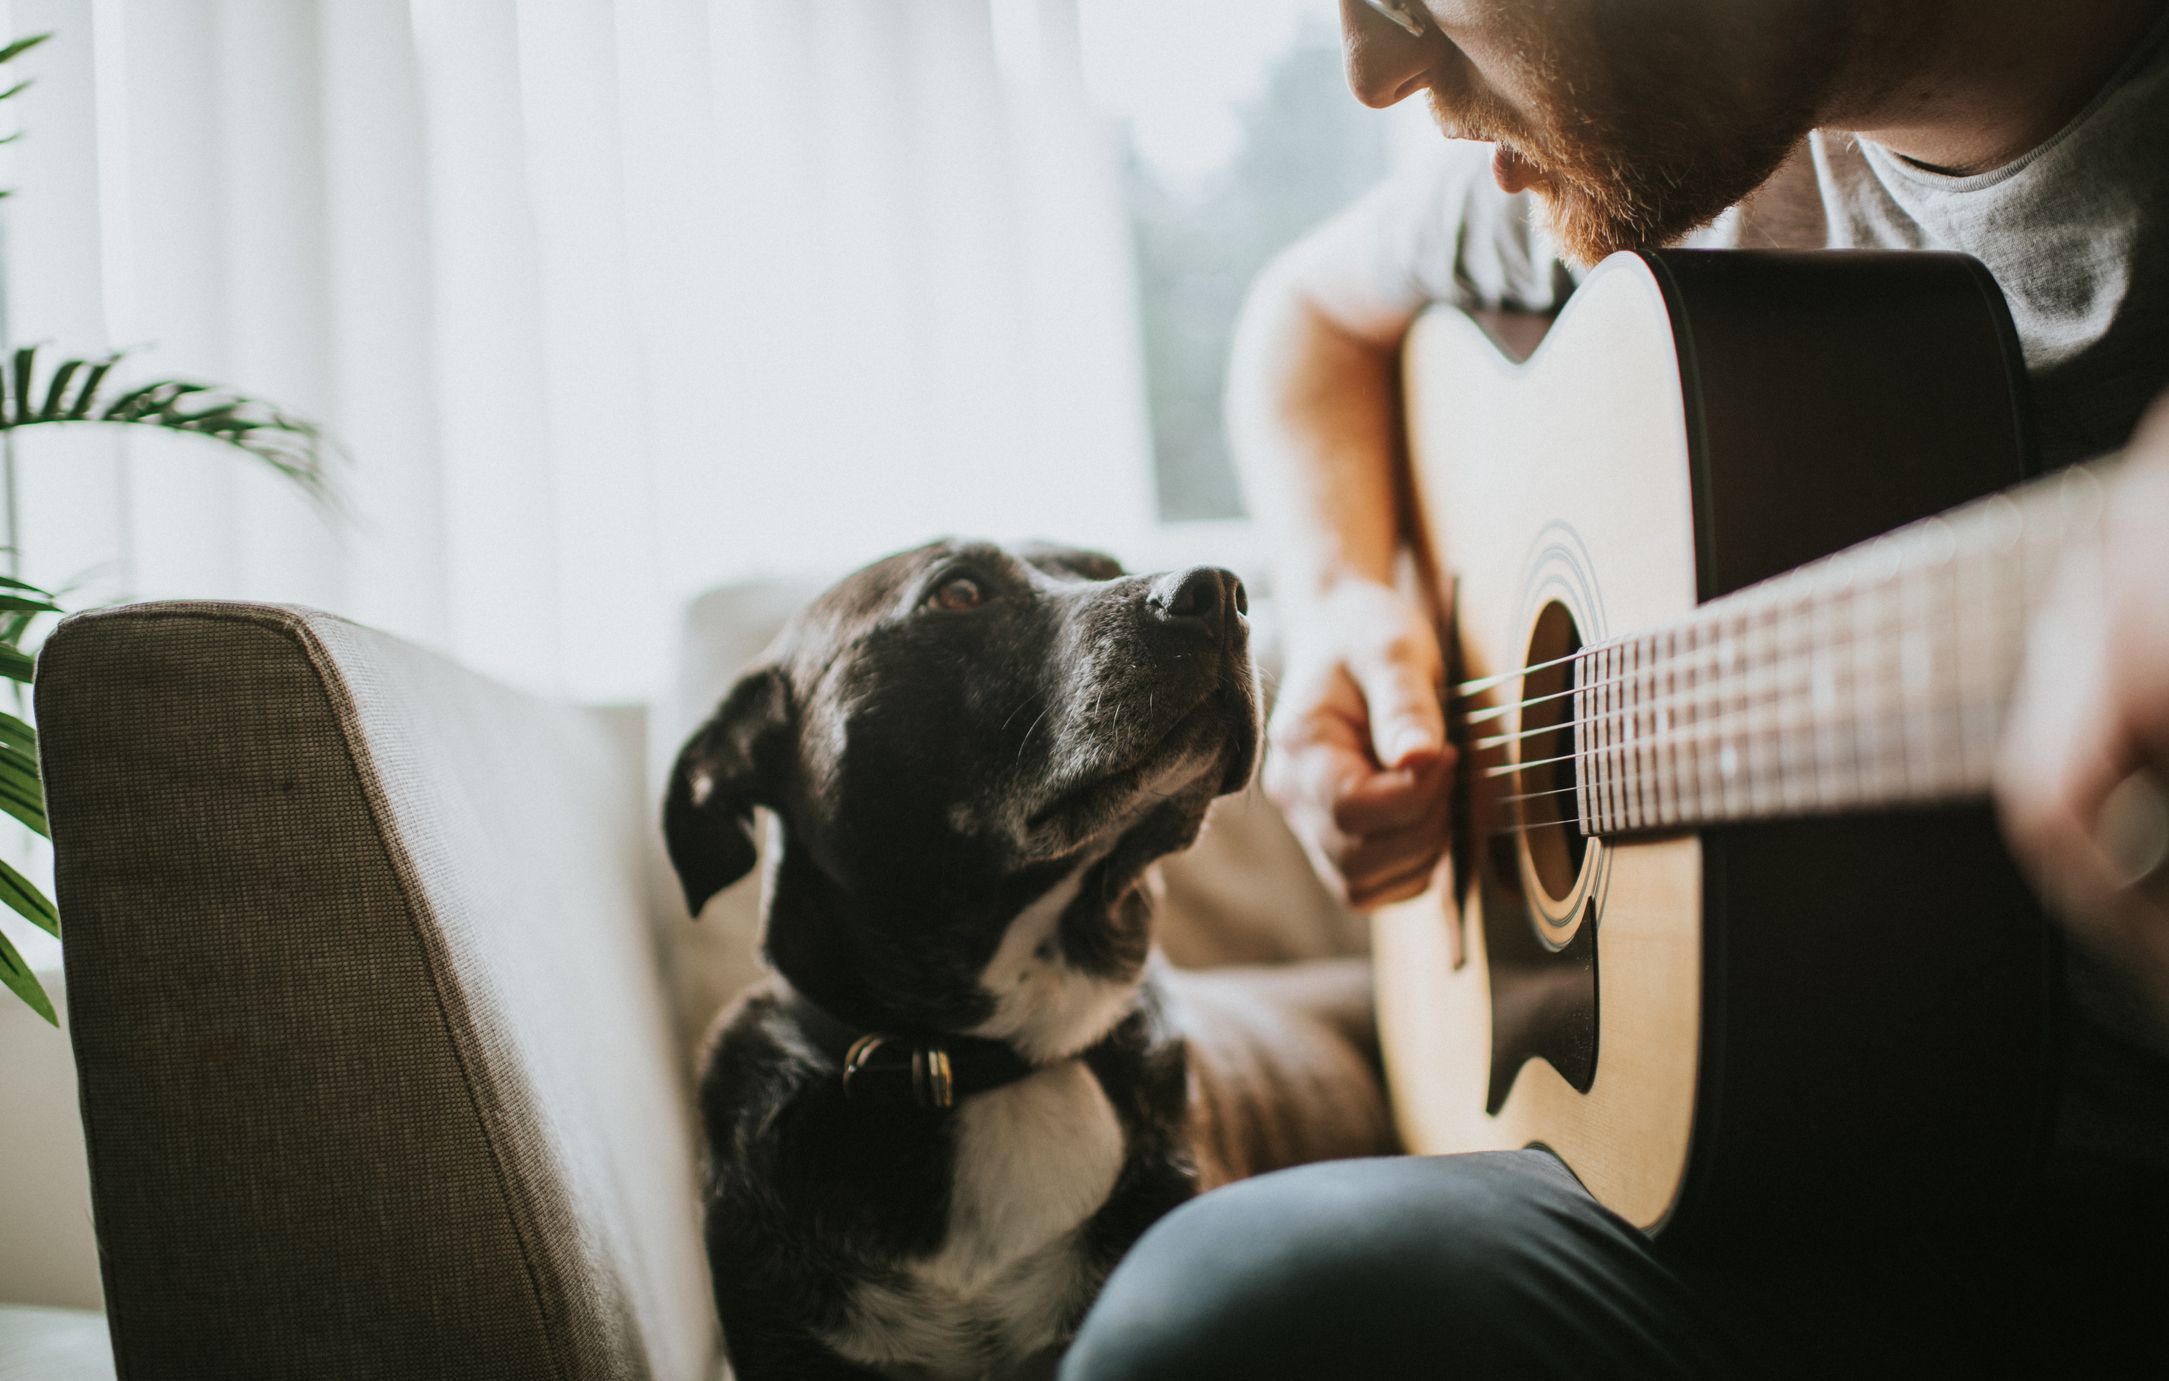 spotify dog music